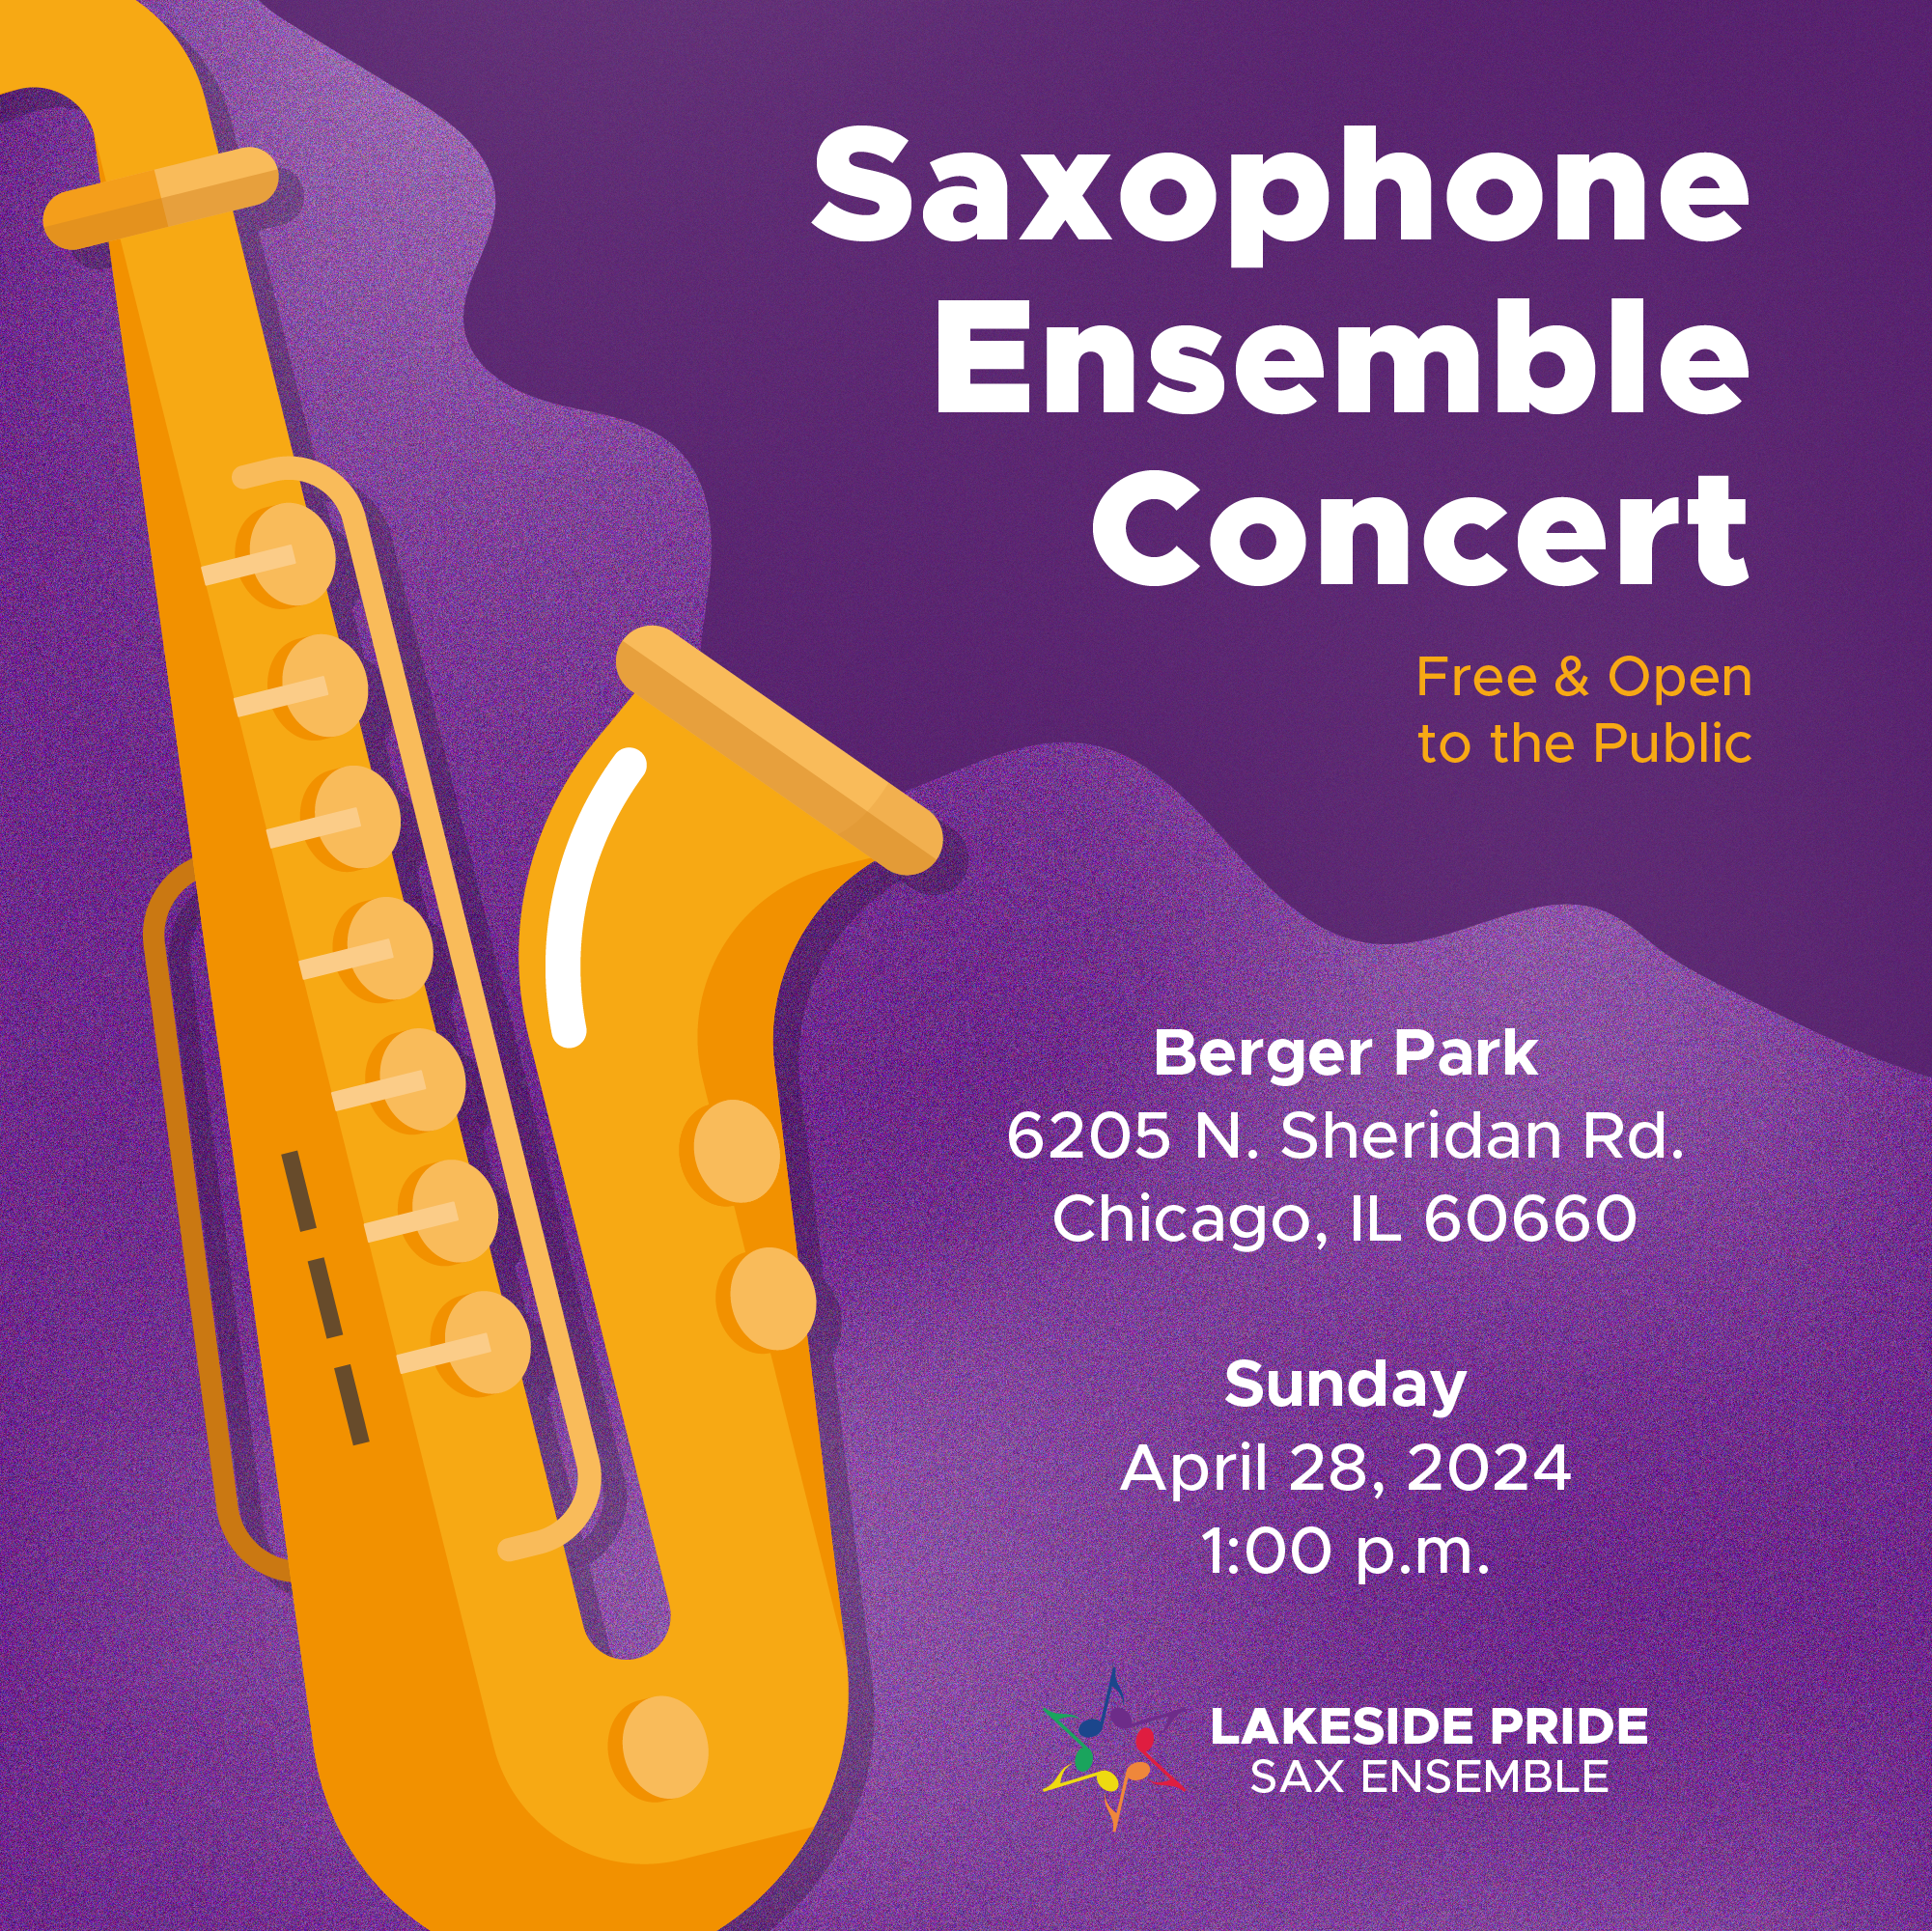 Saxophone Ensemble Concert, Free & Open to the Public, Berger Park, 6205 N Sheridan Rd., Chicago, IL 60660, Sunday, April 28, 2024, 1:00 p.m., Lakeside Pride Sax Ensemble